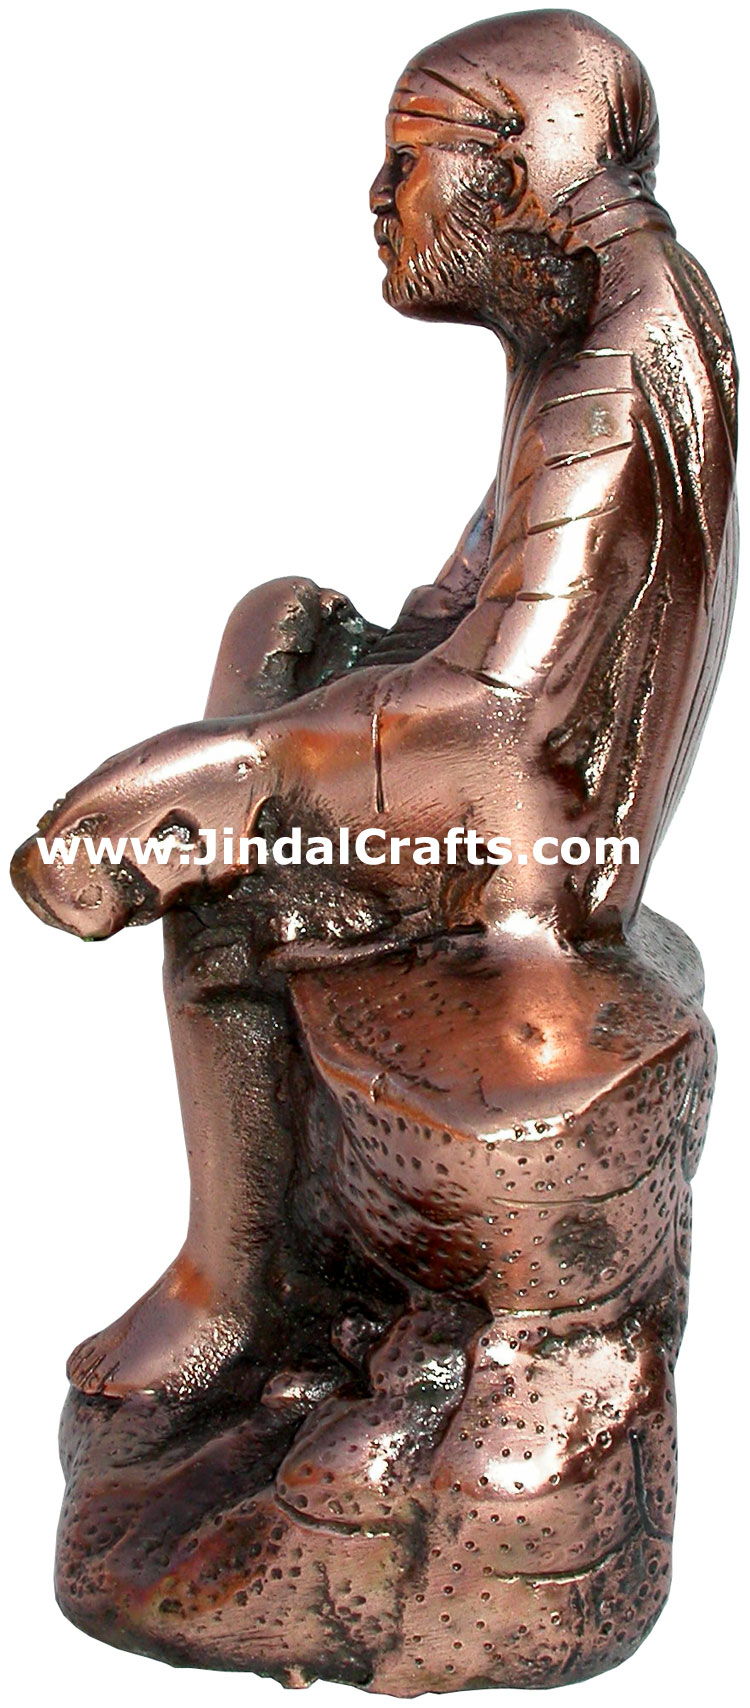 Sai Baba Statues Idols Figurines Sculptures Metal Arts